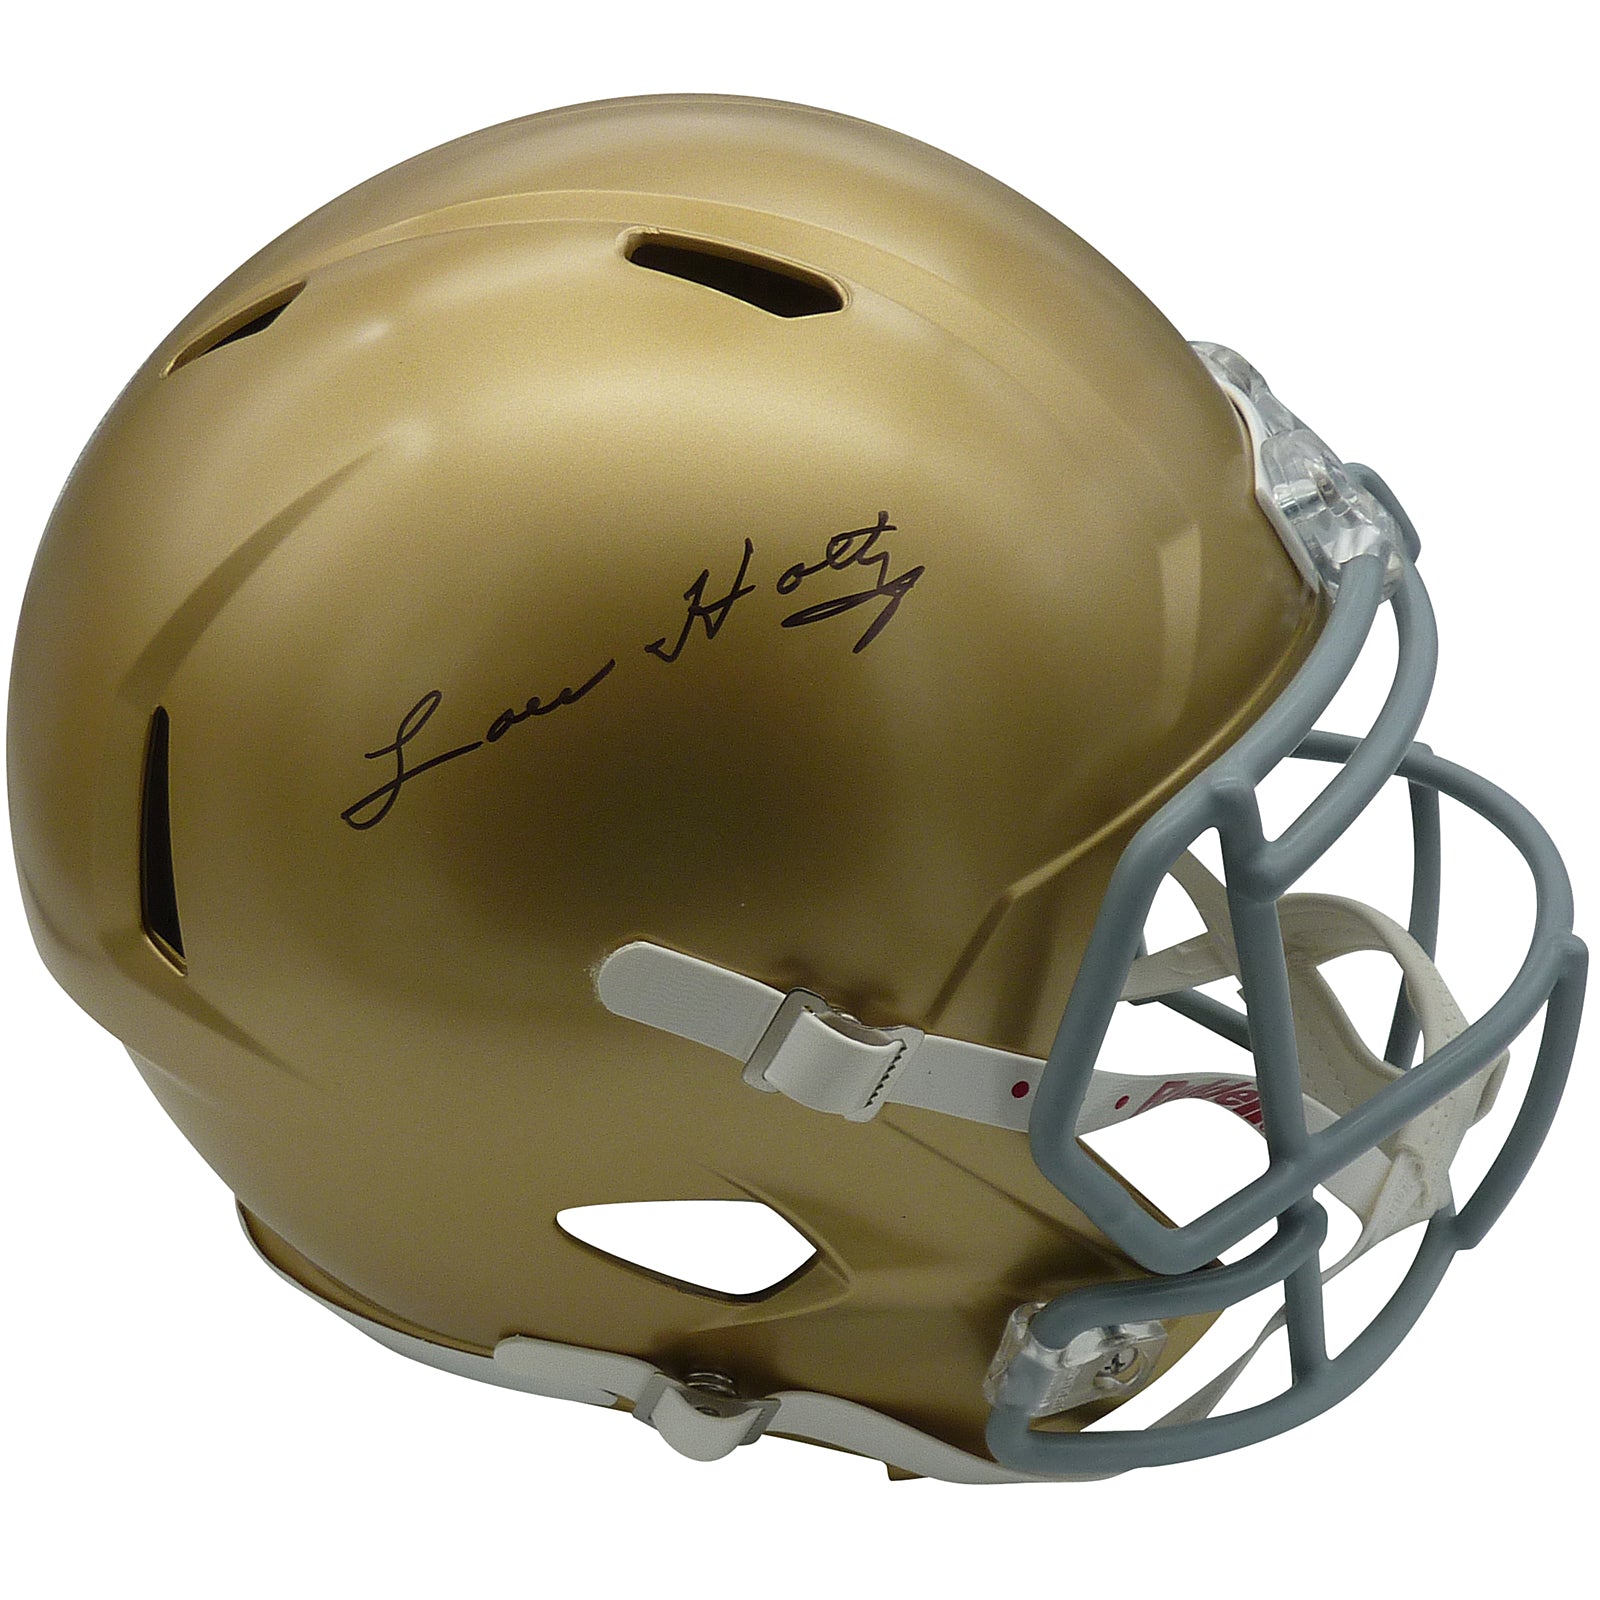 Lou Holtz Autographed Notre Dame Fighting Irish Deluxe Full-Size Replica Helmet - Steiner